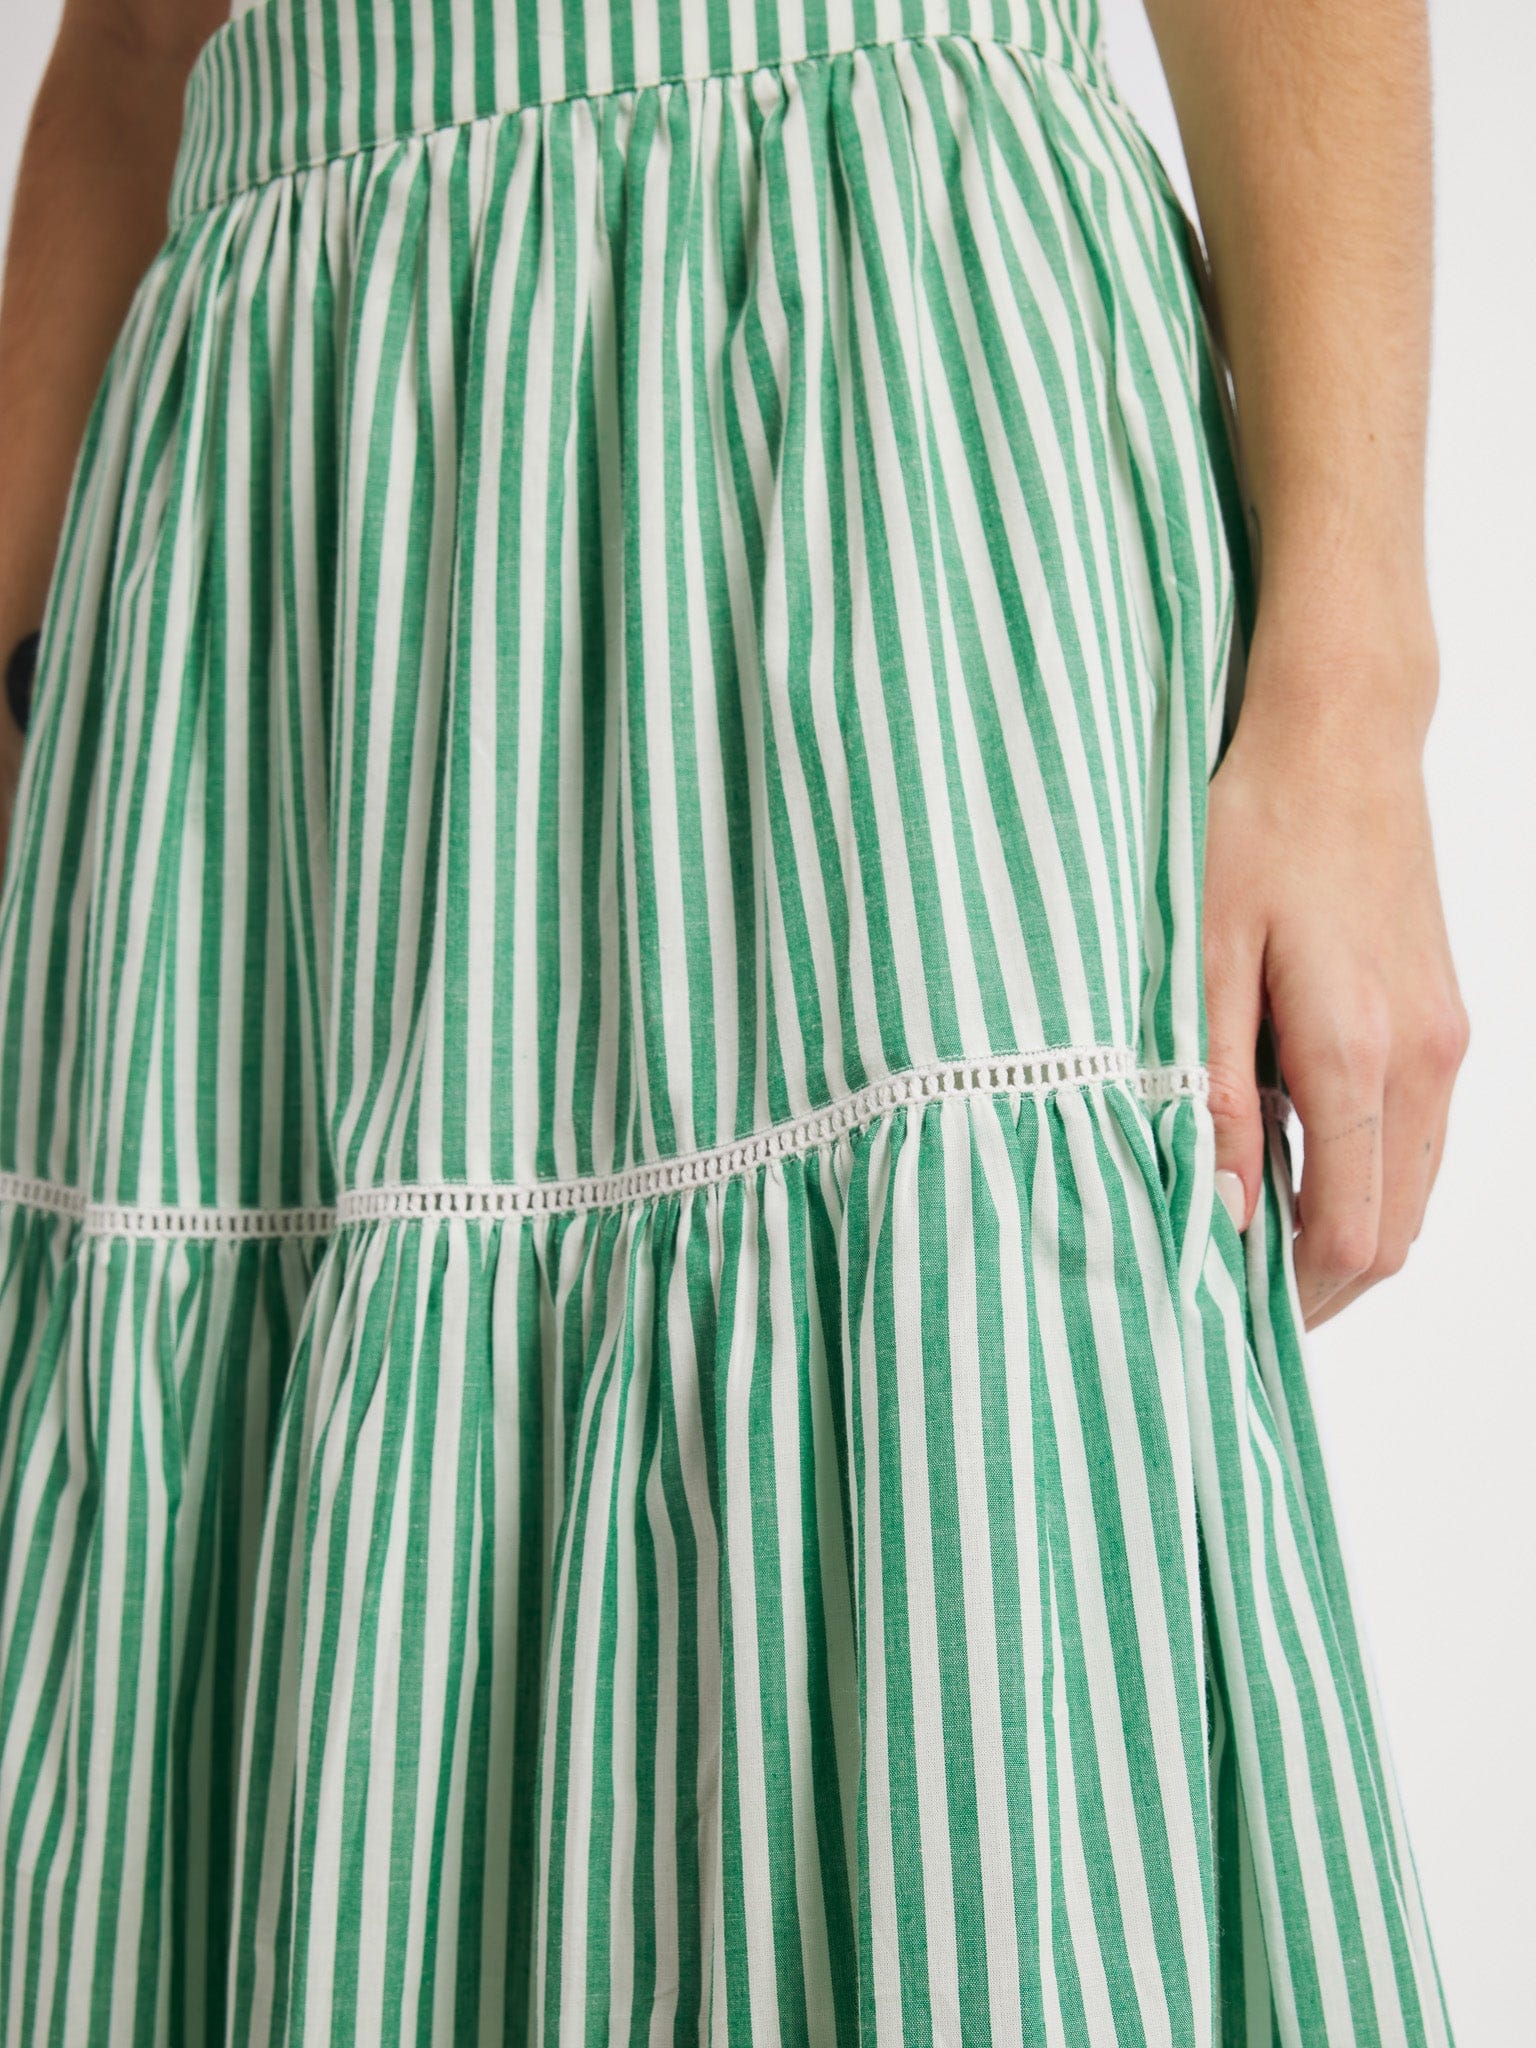 MILLE Clothing Betty Skirt in Kelly Stripe